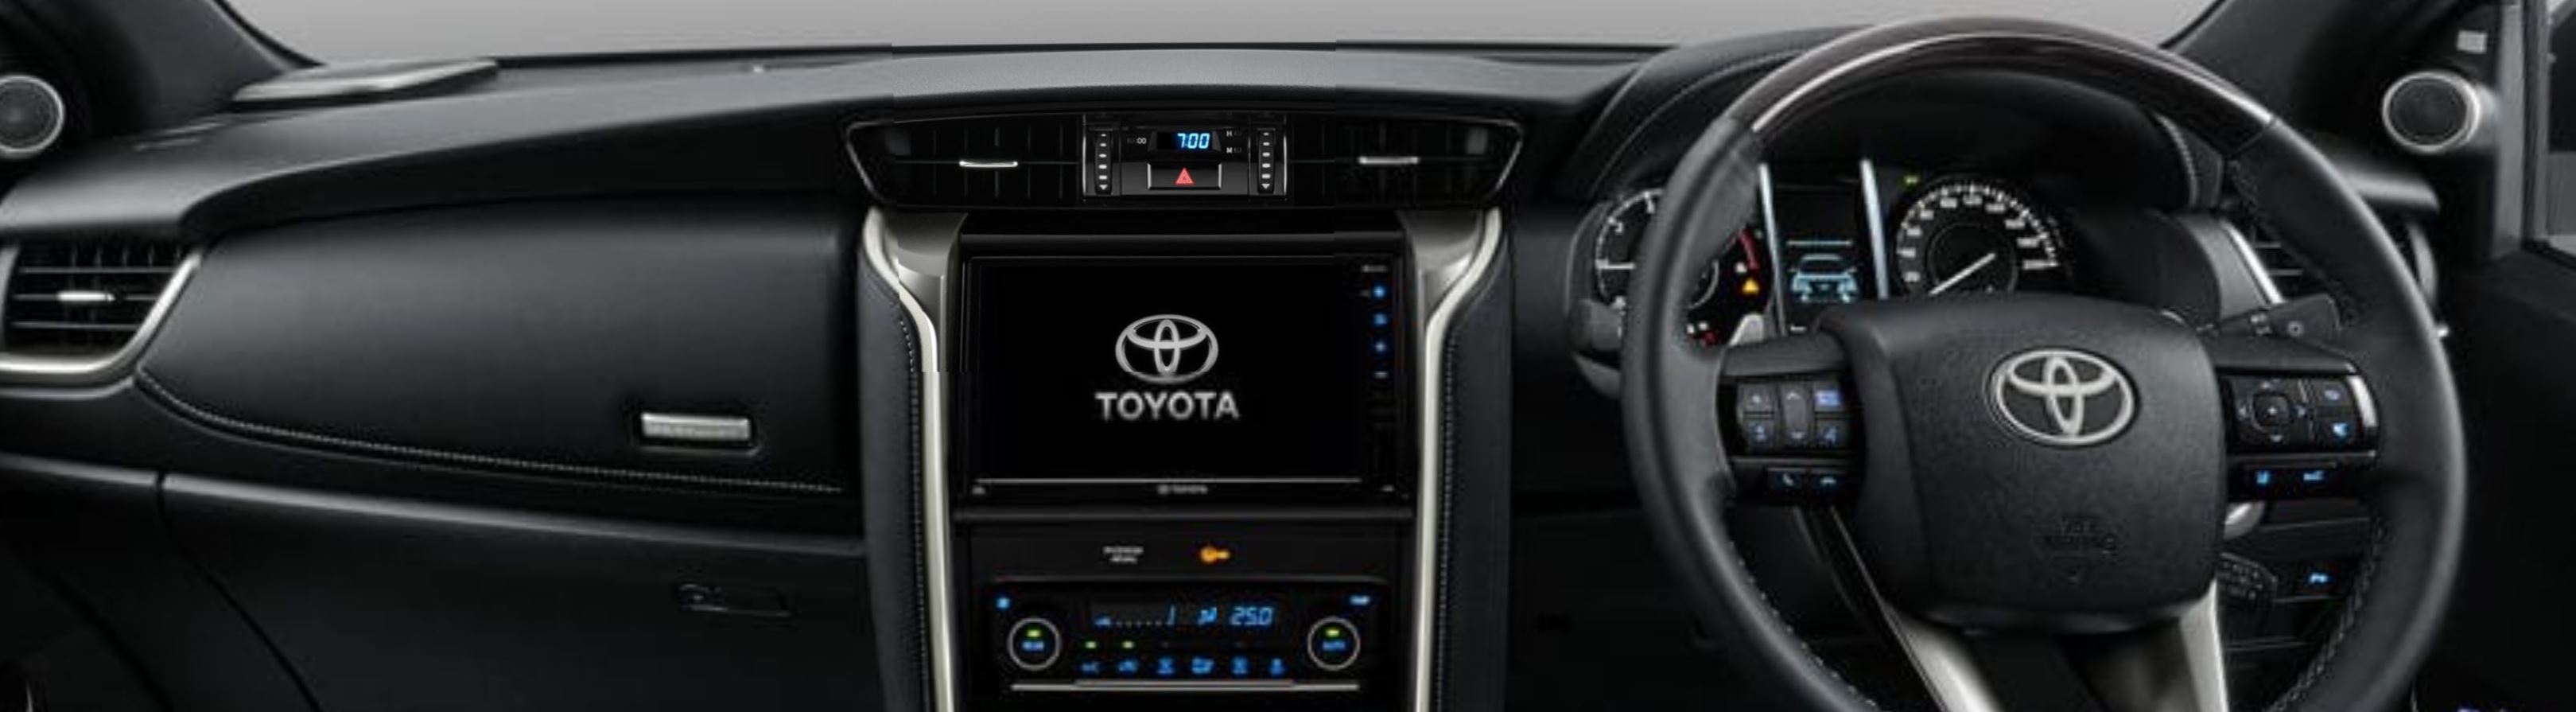 New Toyota Fortuner Interior